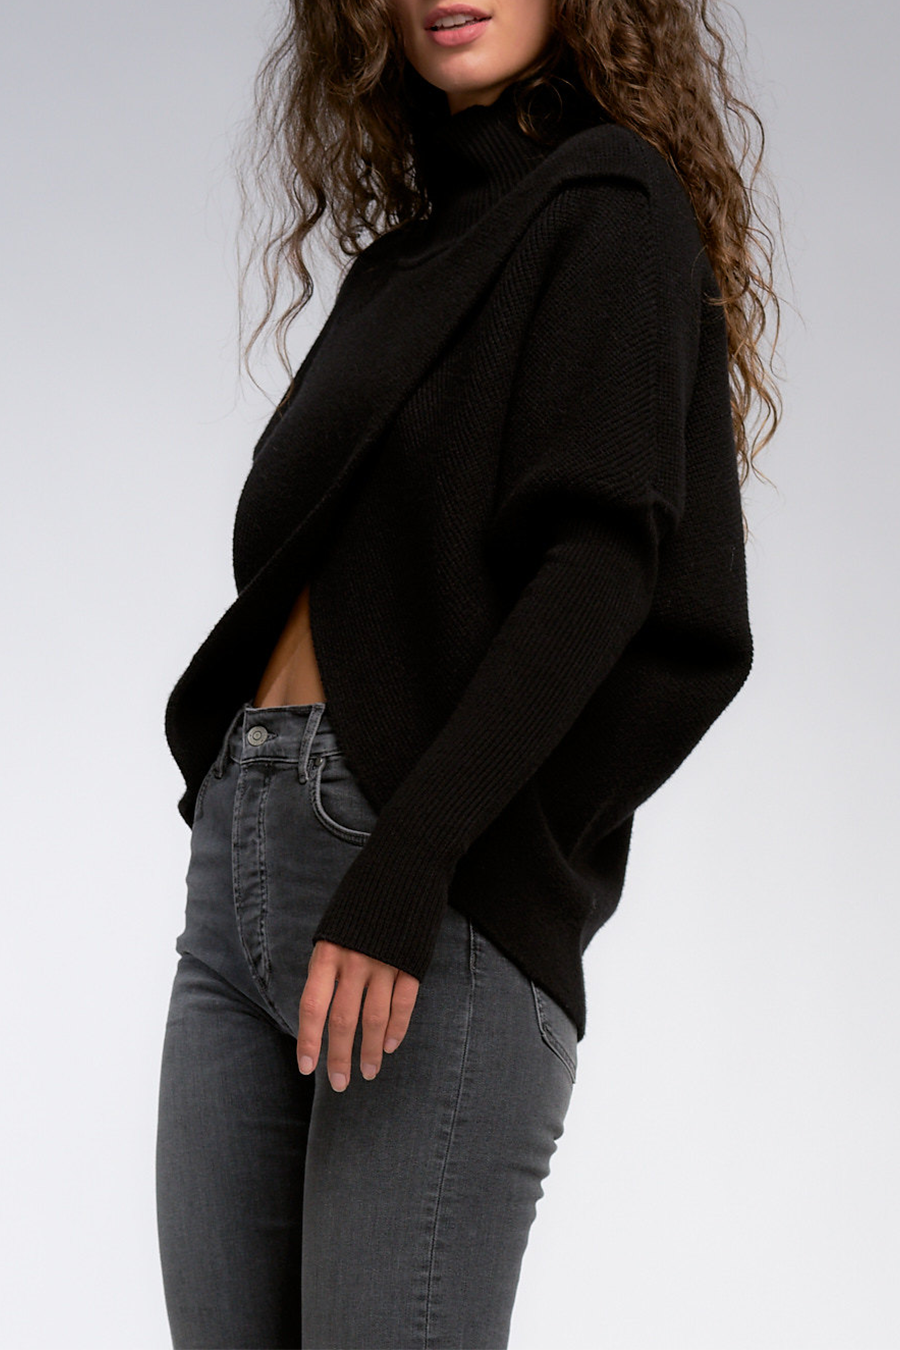 CrossFront Sweater | Black - Main Image Number 2 of 3